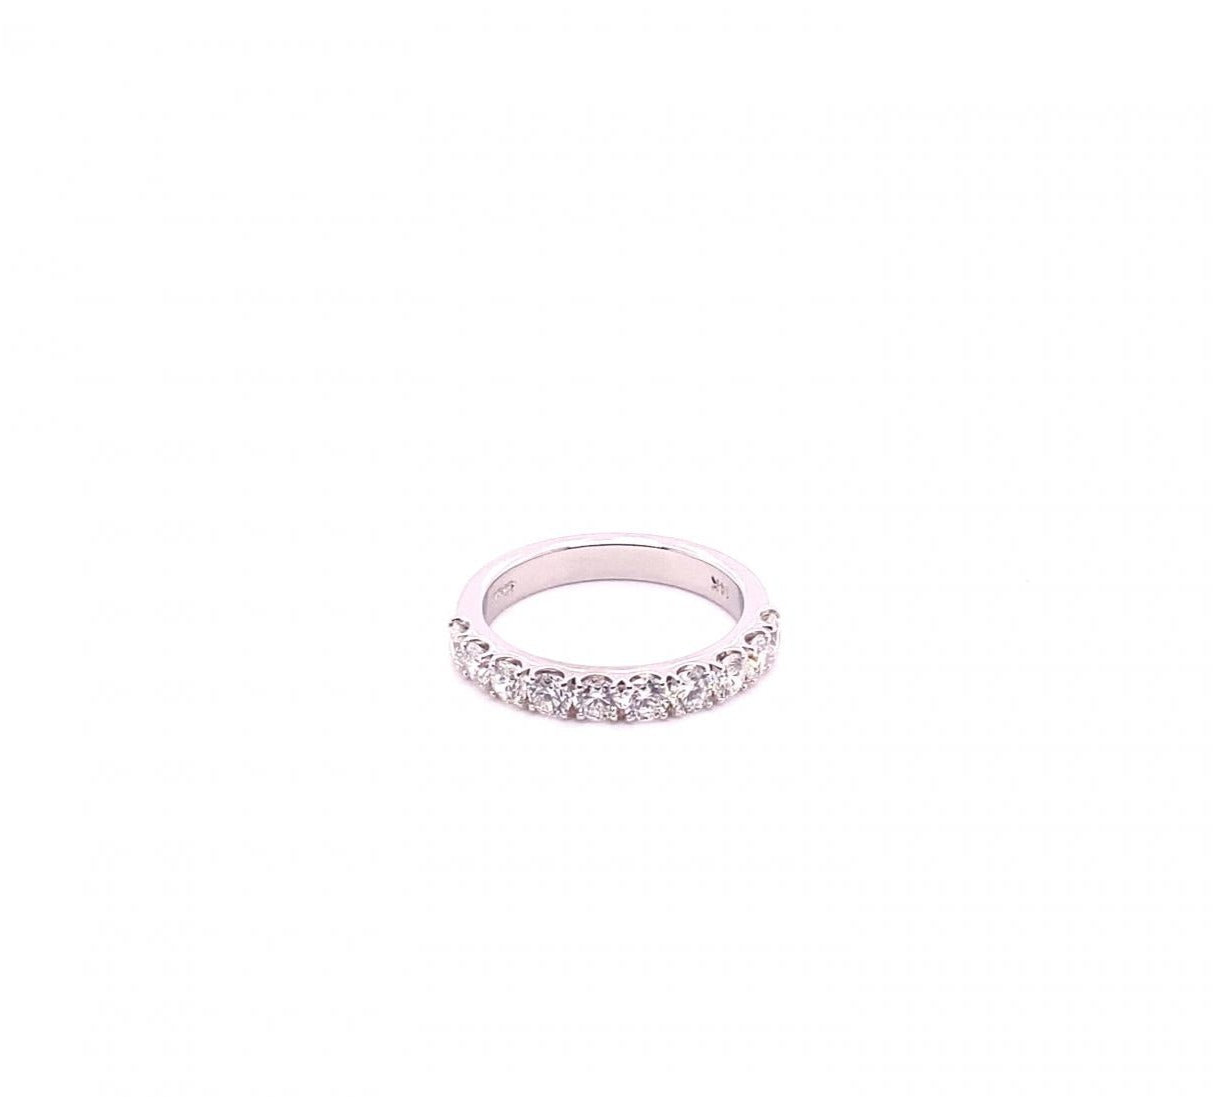 1.01 Carat Round Brilliant Cut Diamond Engagement Ring 14K White Gold